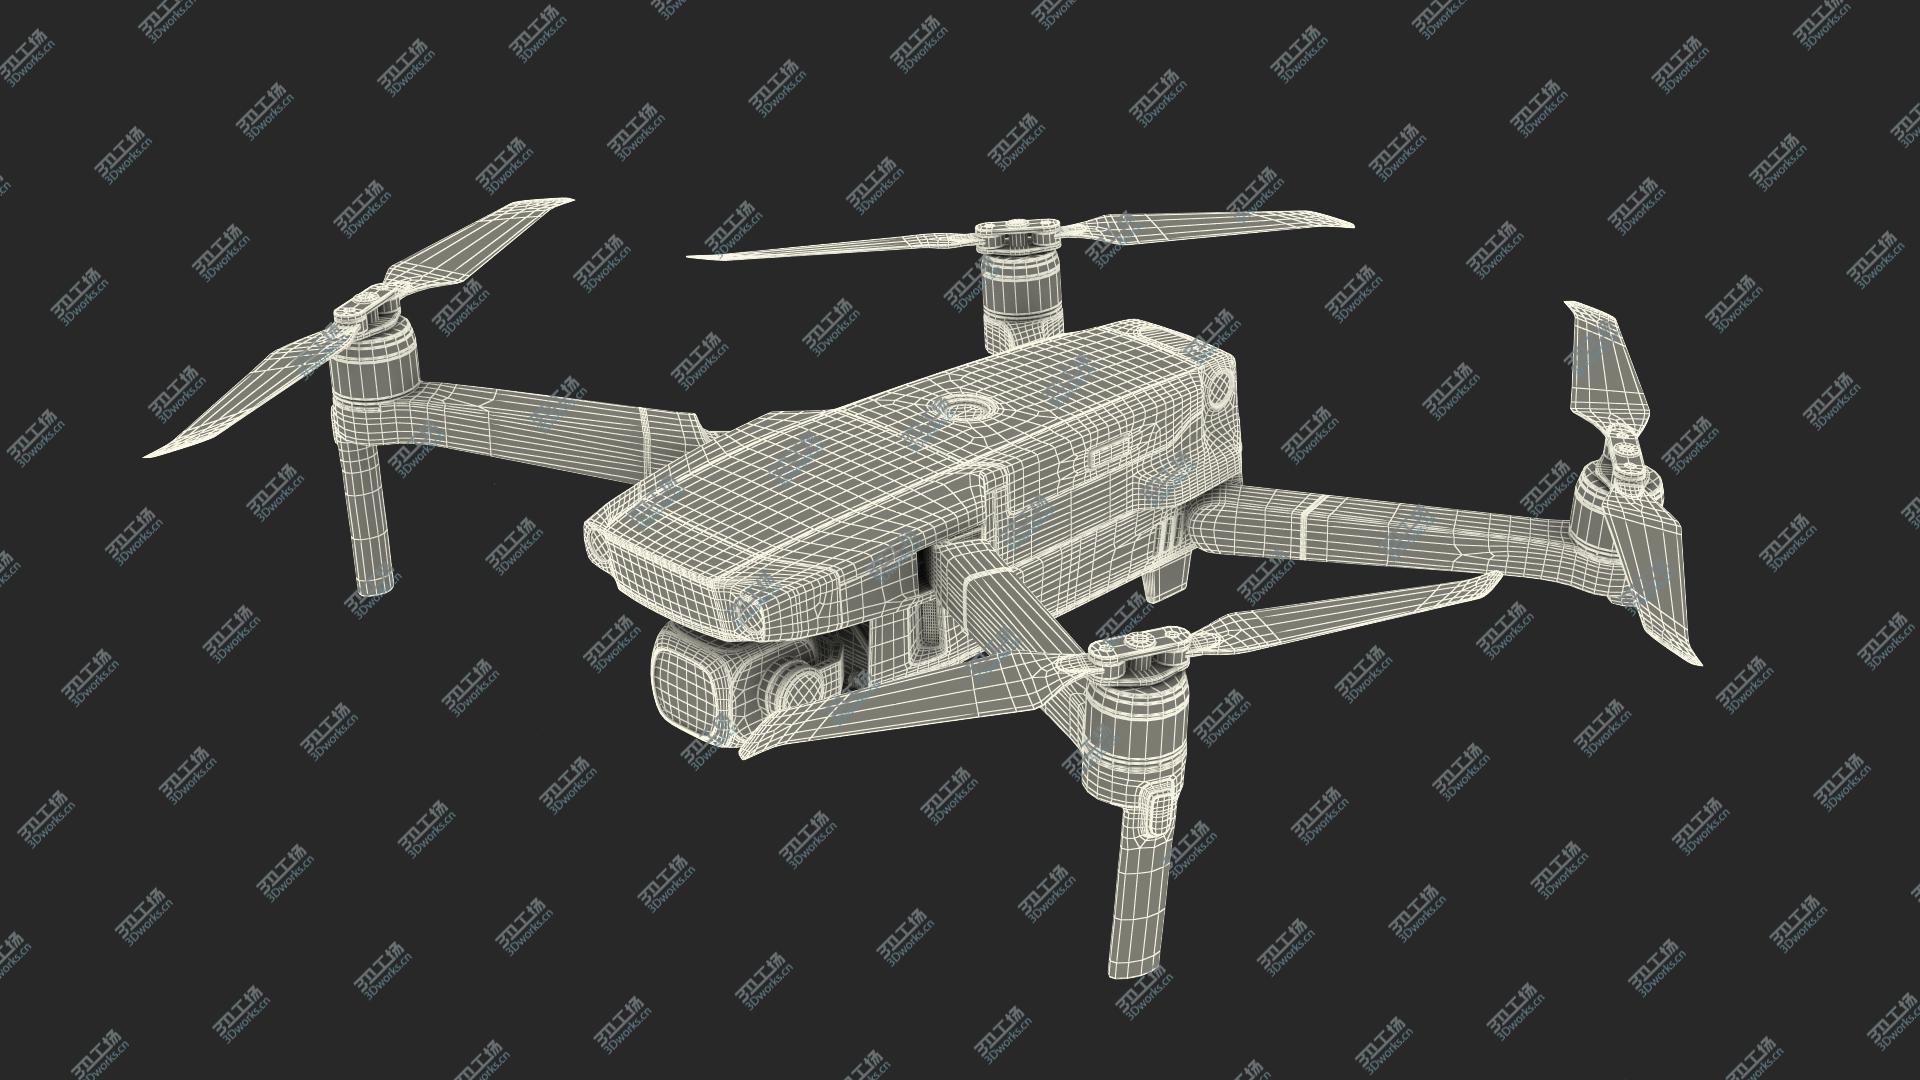 images/goods_img/2021040164/DJI Mavic 2 Pro Quadcopter with 4K Hasselblad Camera 3D model/3.jpg